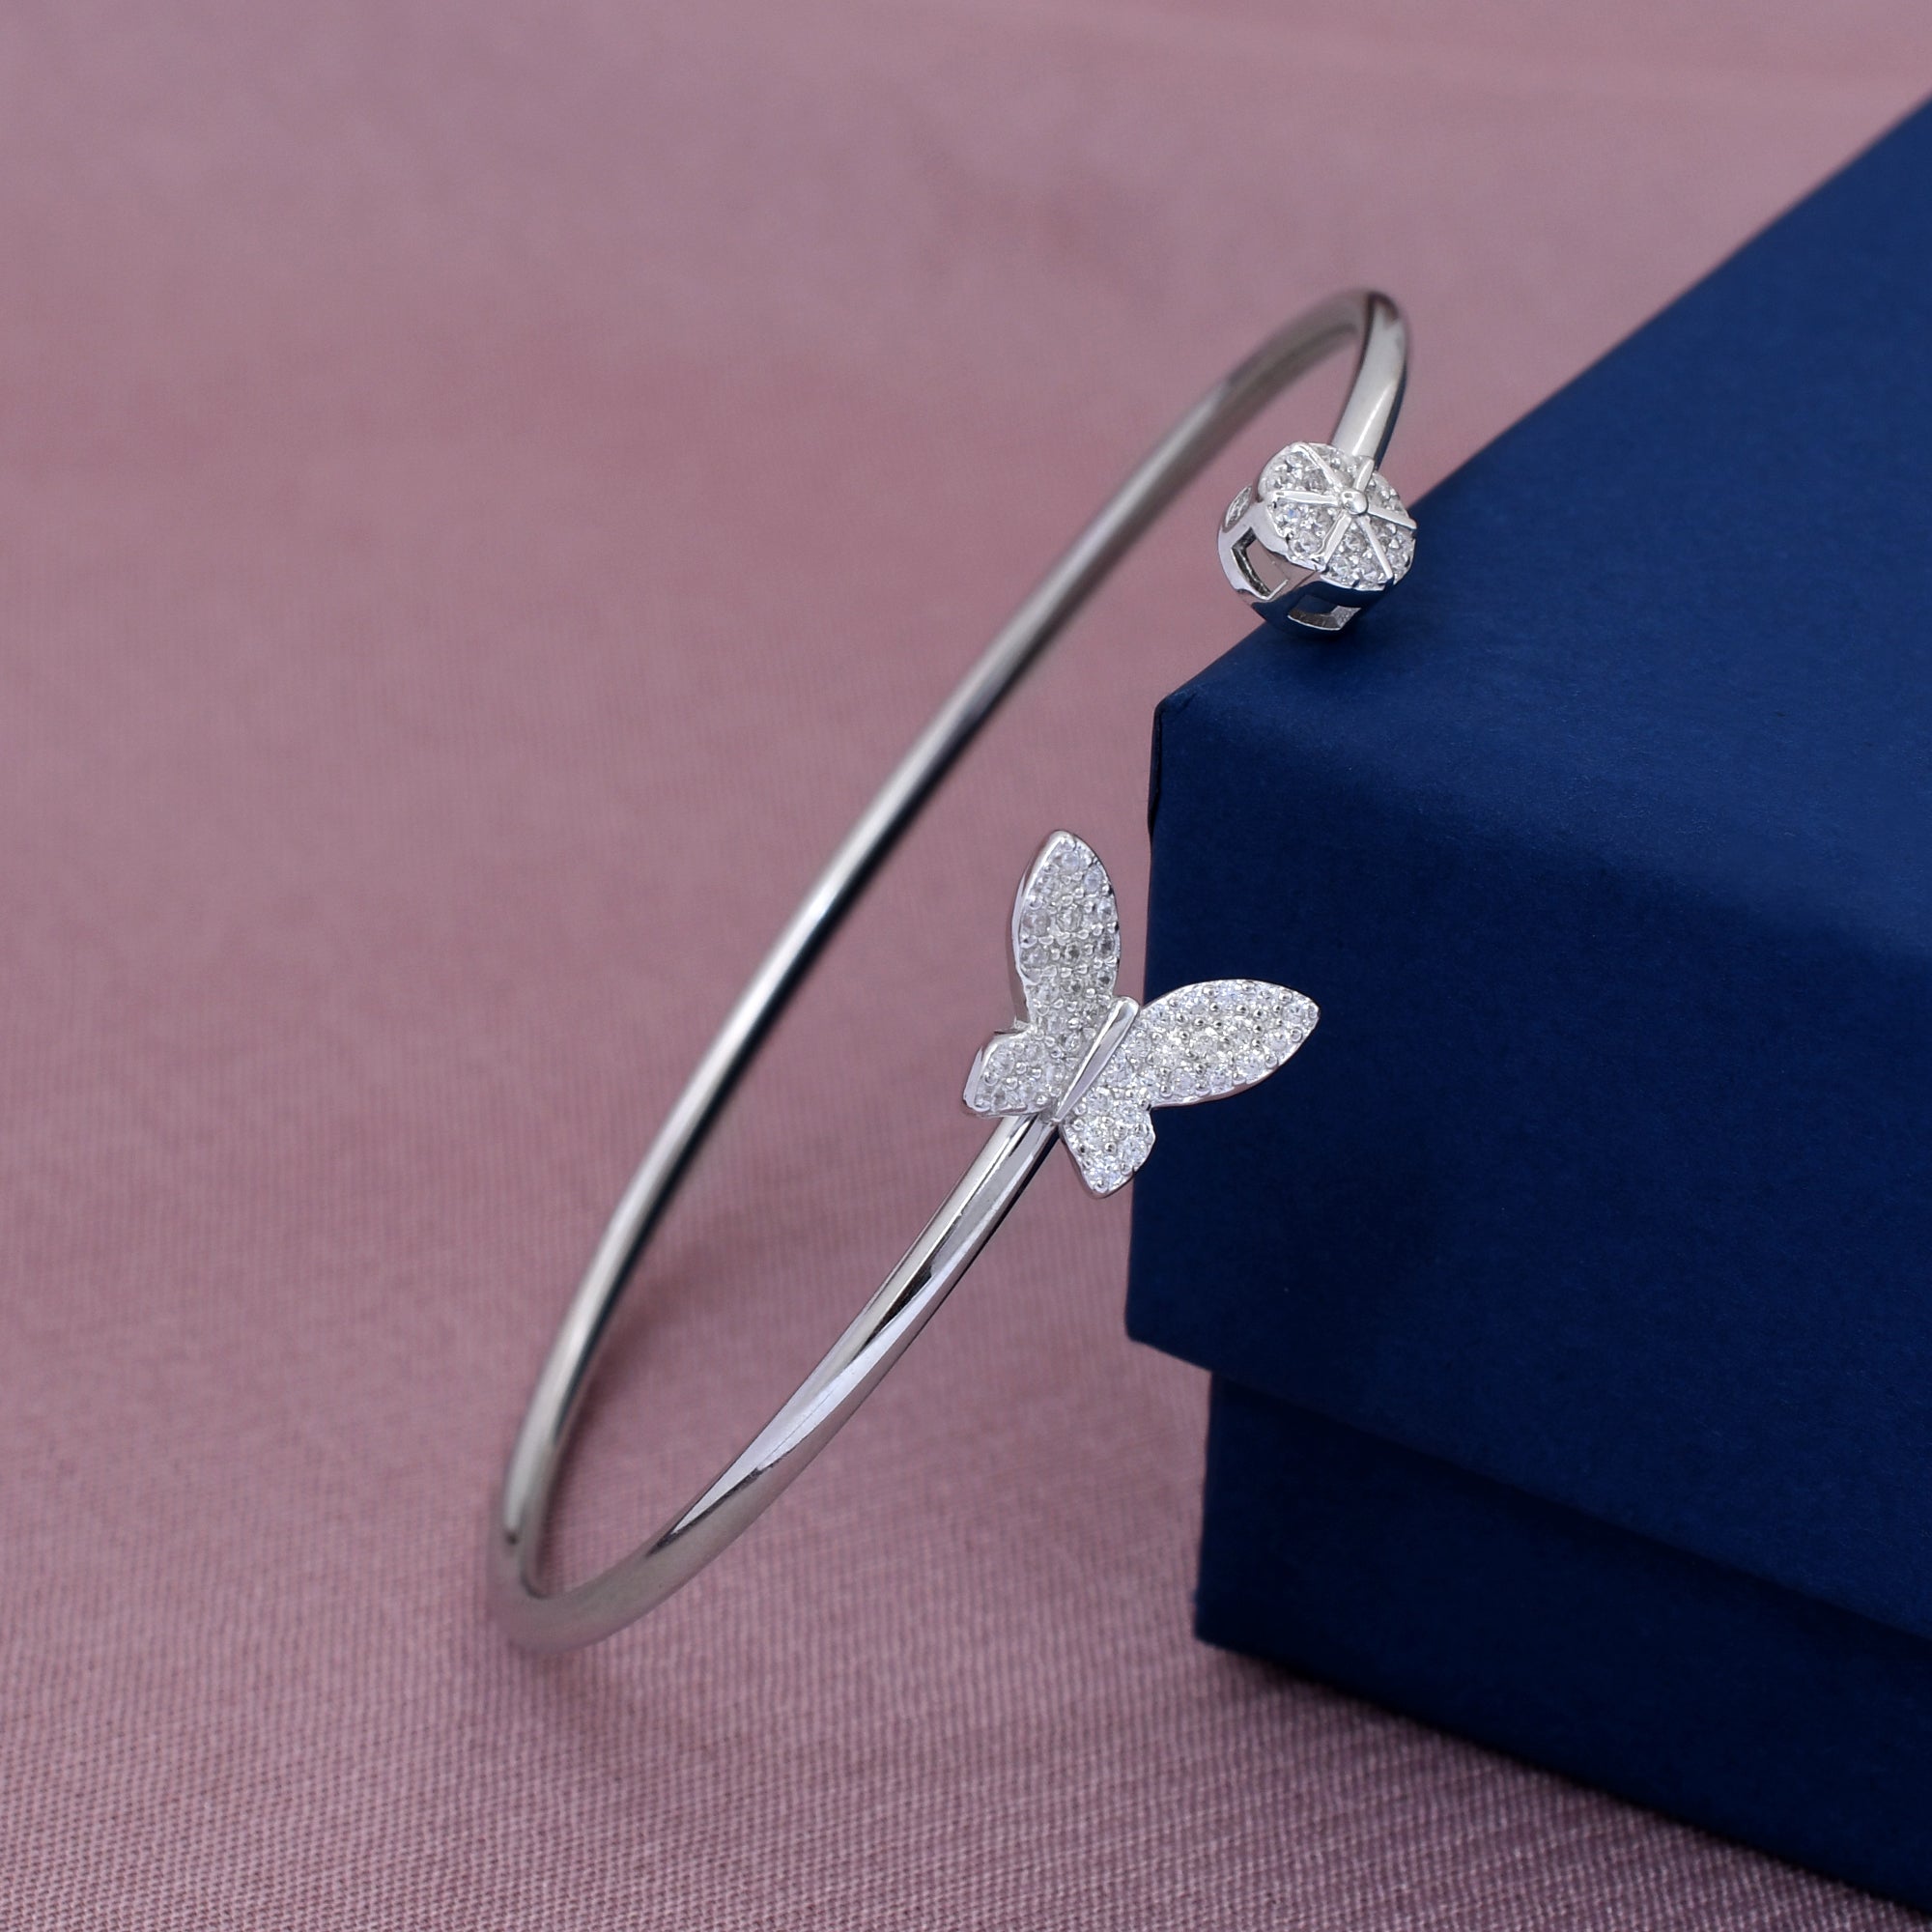 Butterfly Design 925 Sterling Silver Bracelet